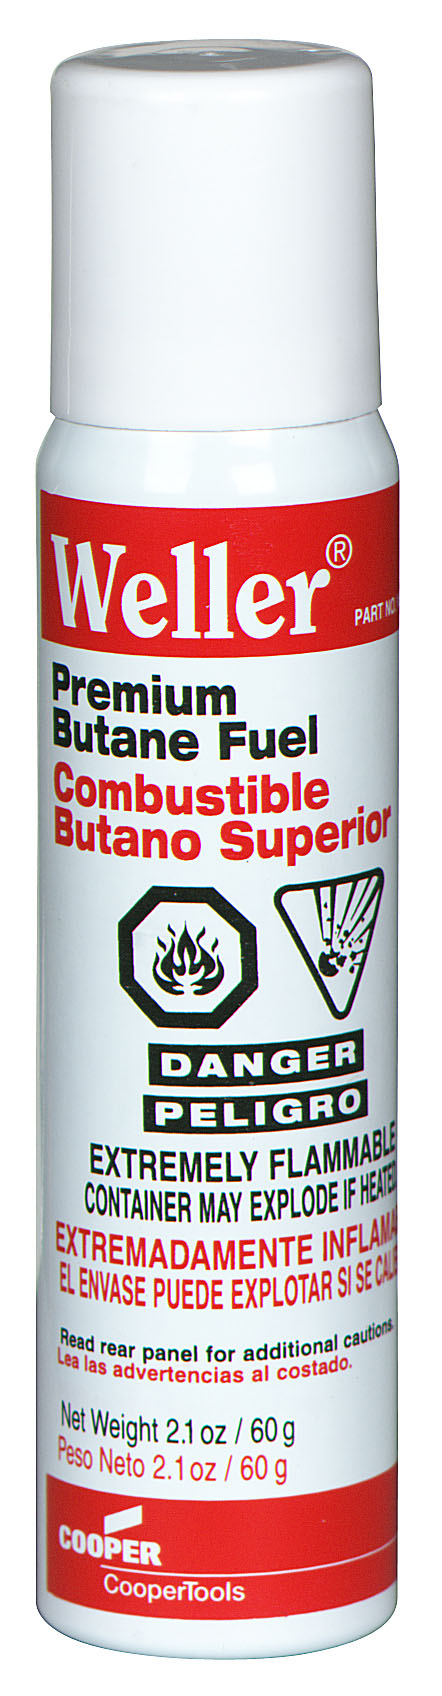 2.1 oz Premium Butane Fuel for Portasol(R) and Pyropen(R) Cordle